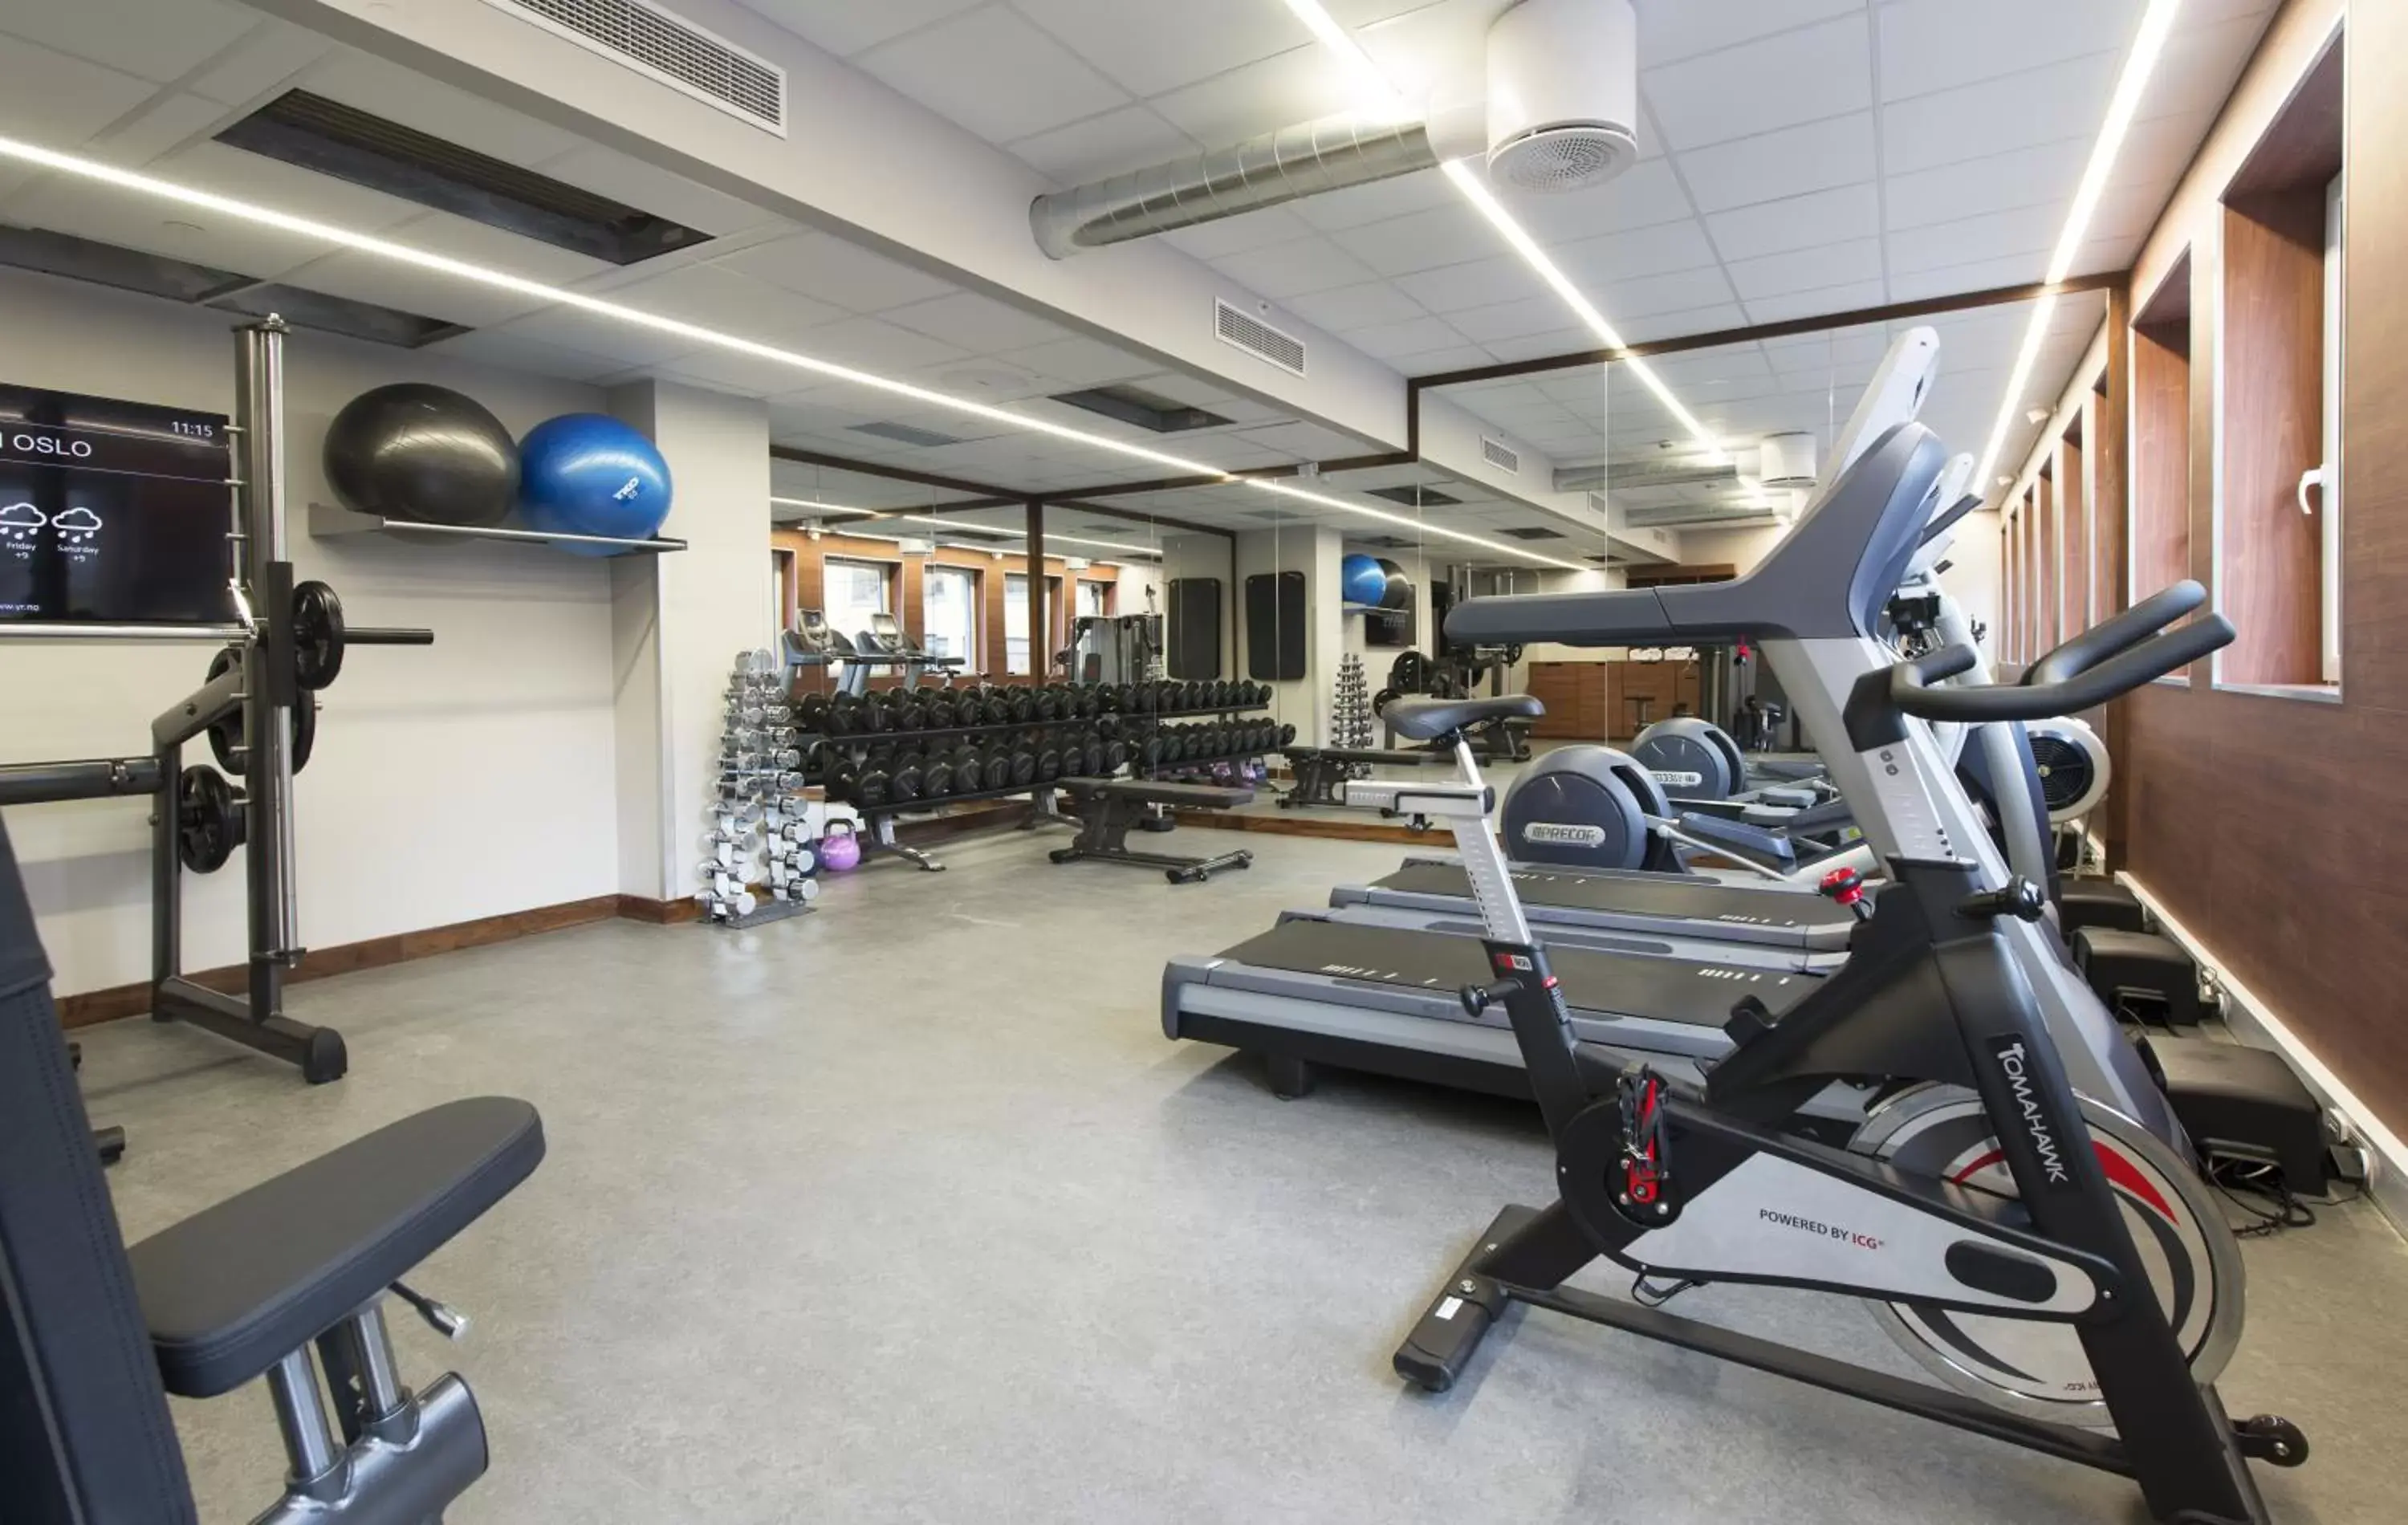 Fitness centre/facilities, Fitness Center/Facilities in Thon Hotel Rosenkrantz Oslo